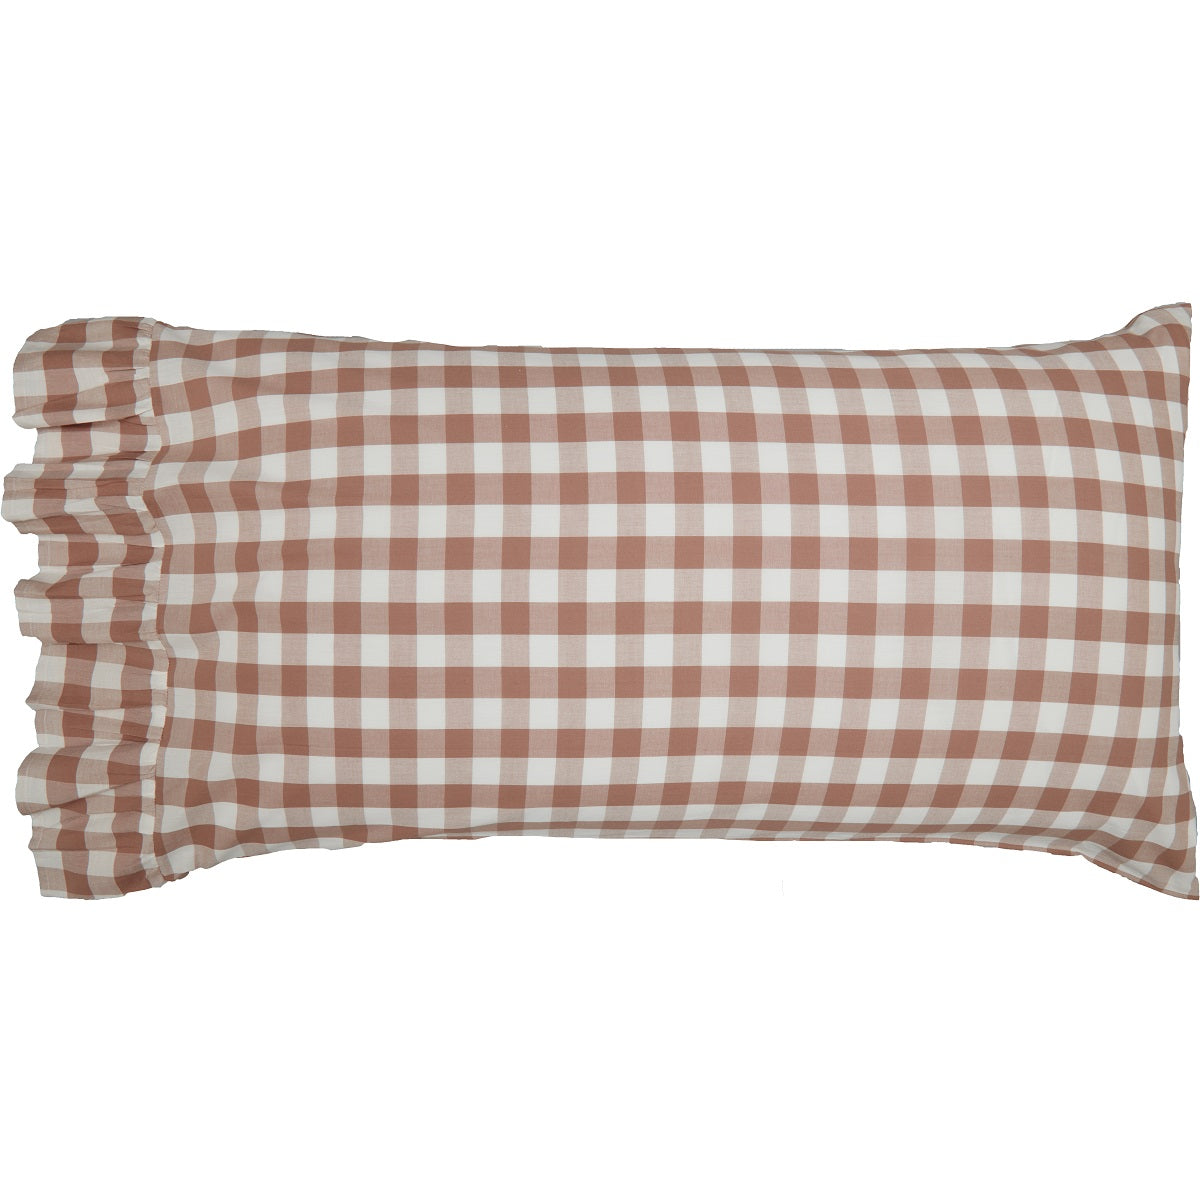 Annie Buffalo Portabella Check King Pillow Case Set of 2 21x36+4 VHC Brands